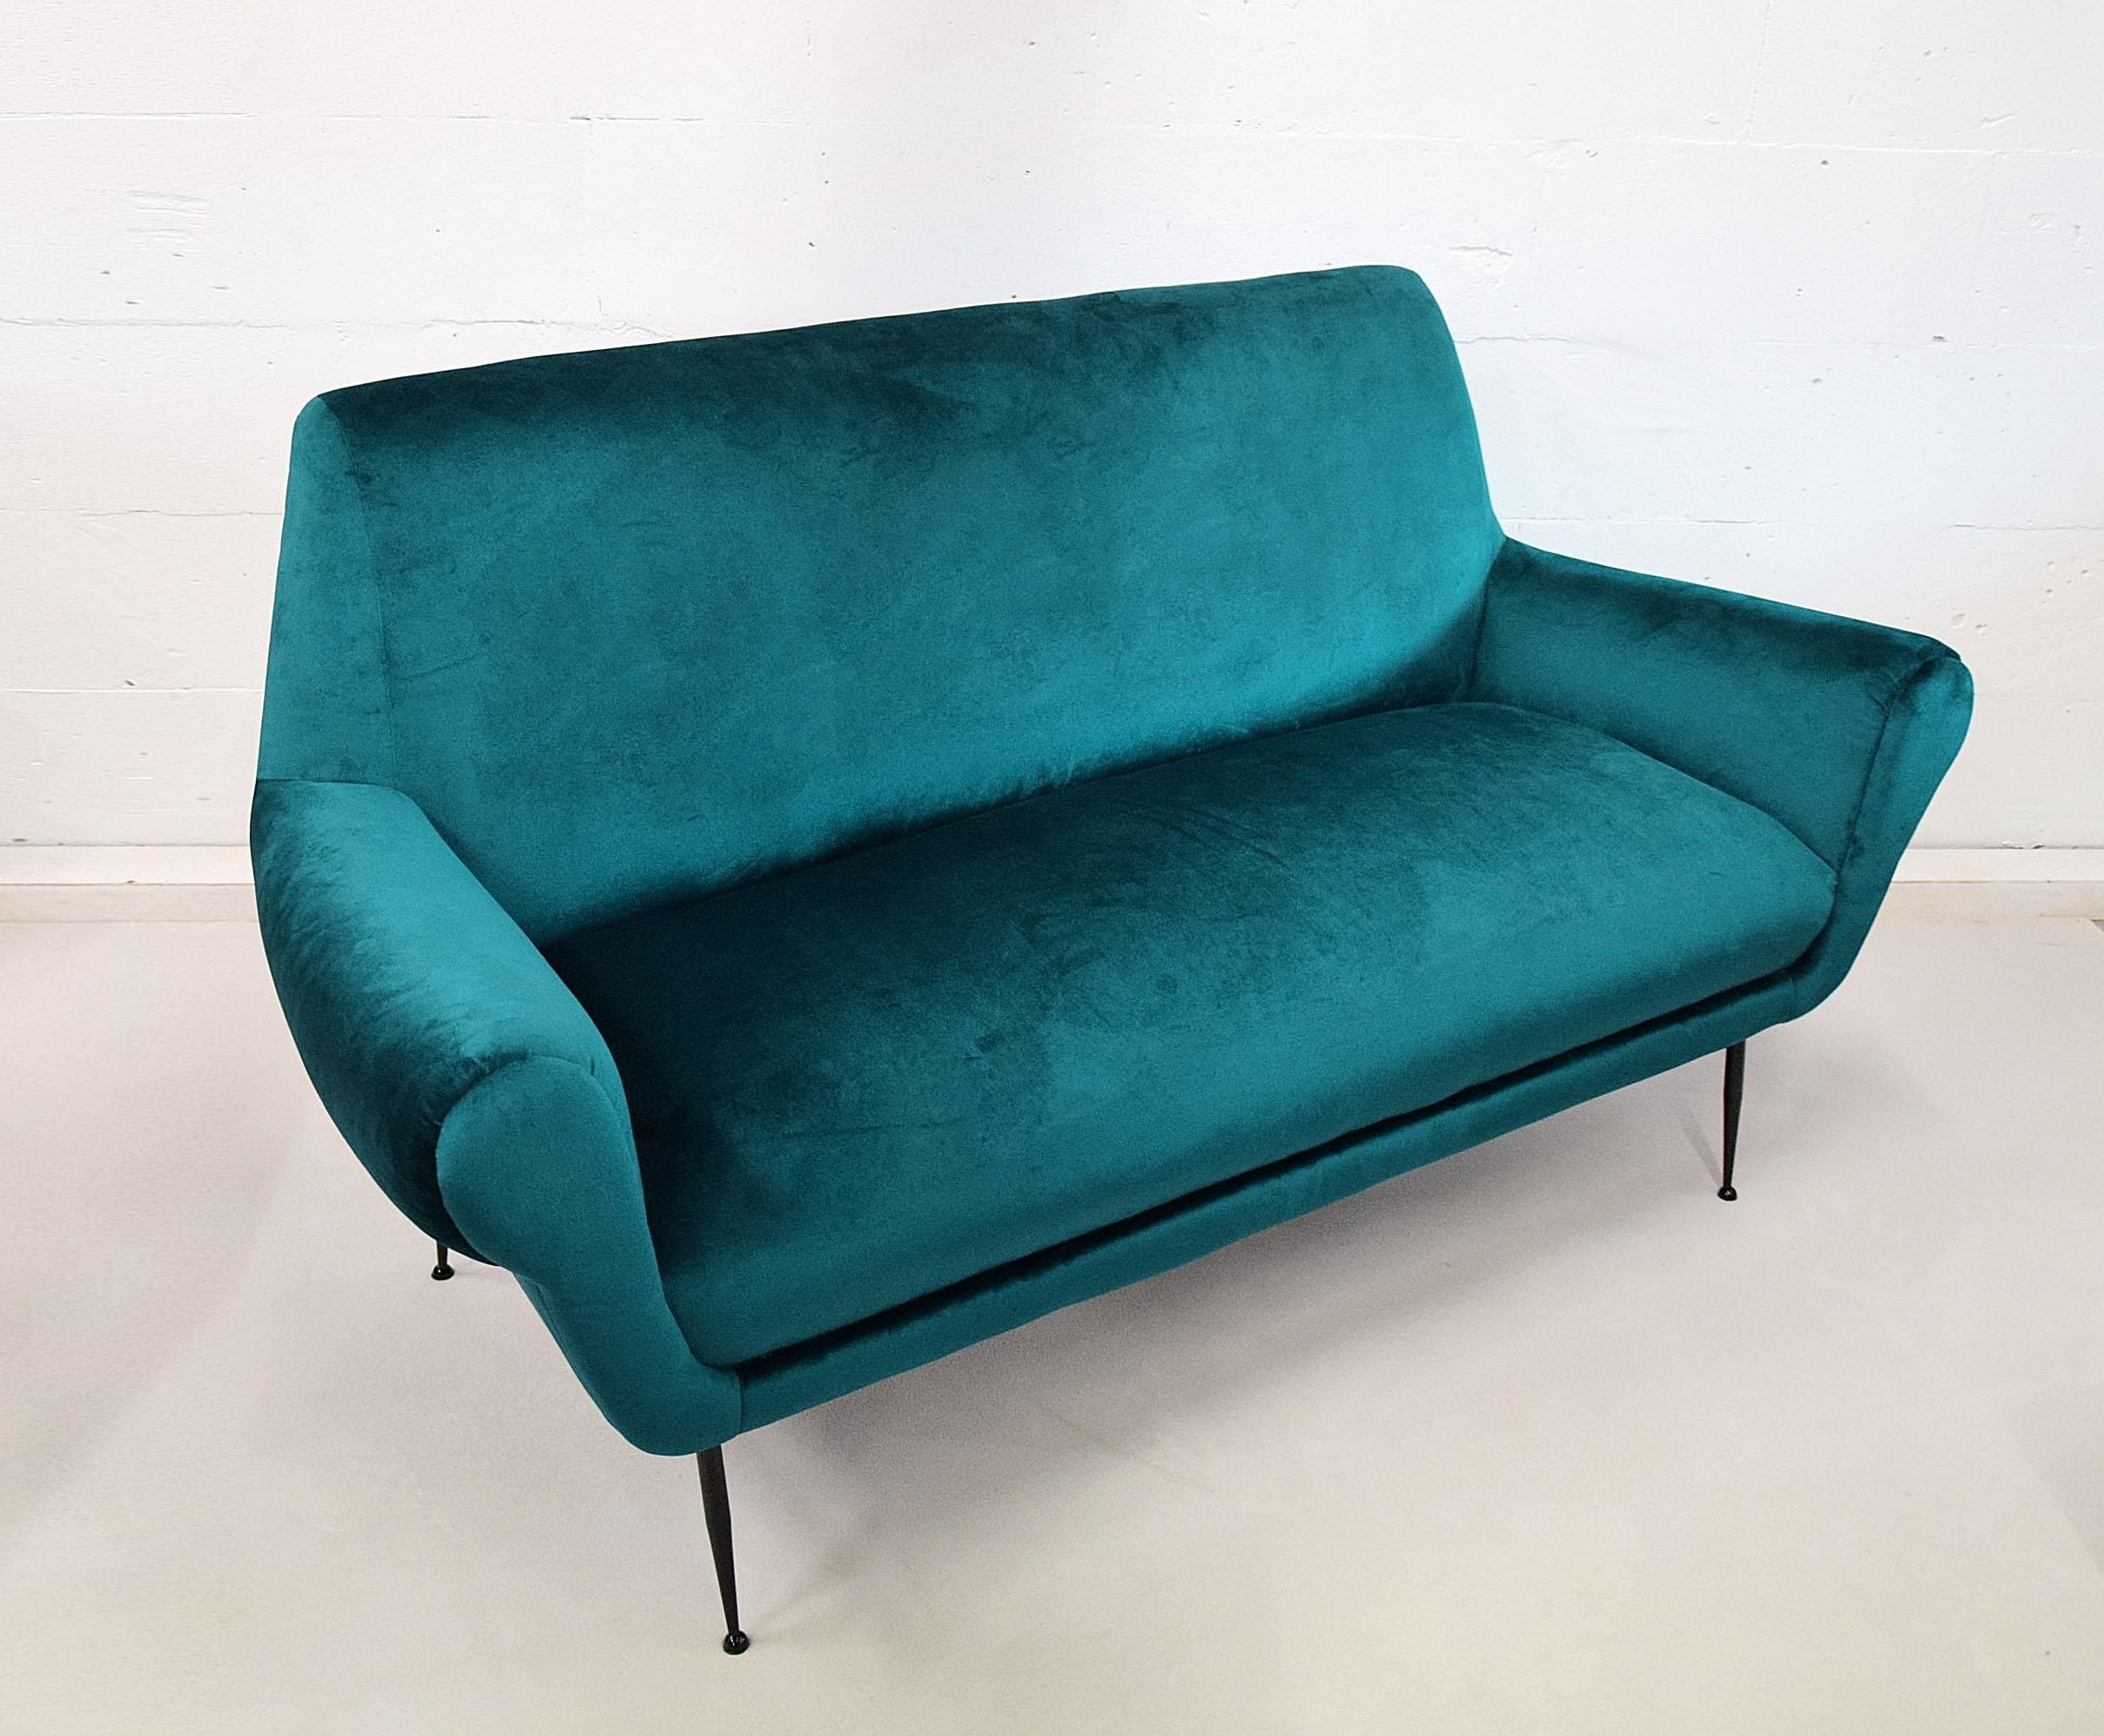 Italian Minotti Mid-Century Modern Turquoise Sofa by Gigi Radice